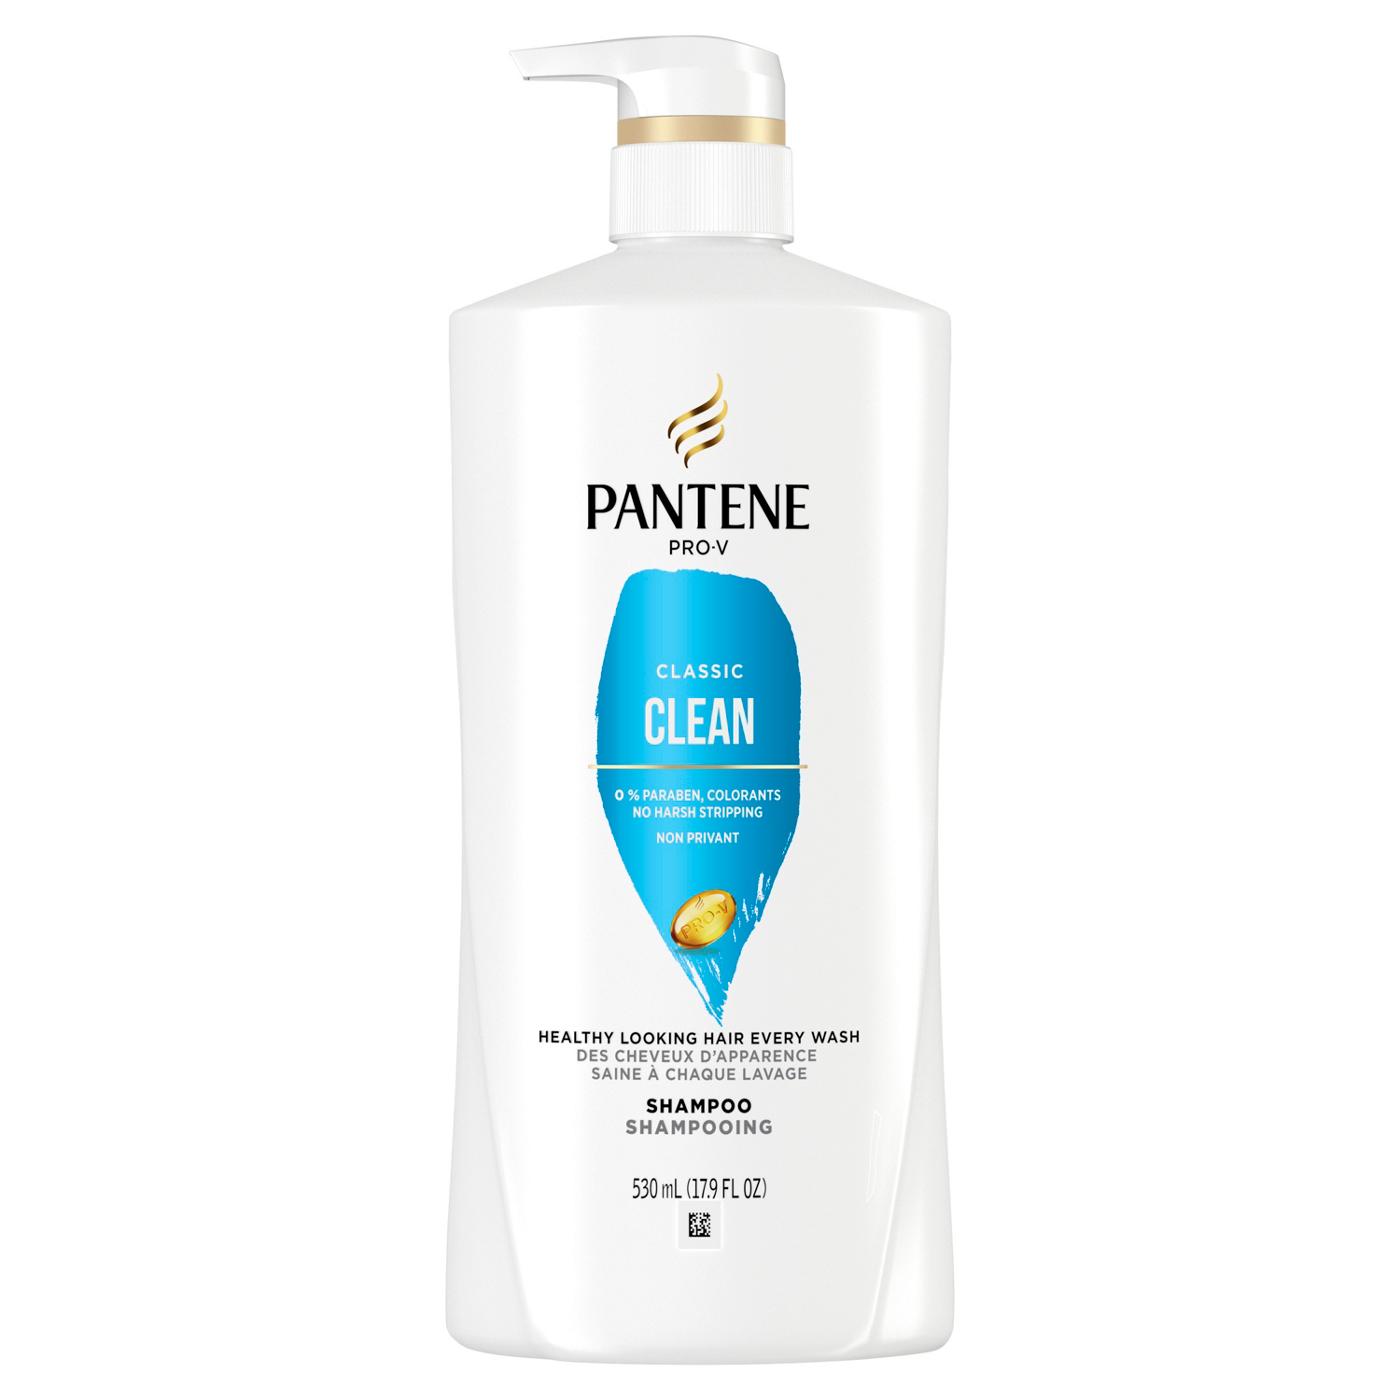 Pantene Pro-V Classic Clean Shampoo; image 1 of 10